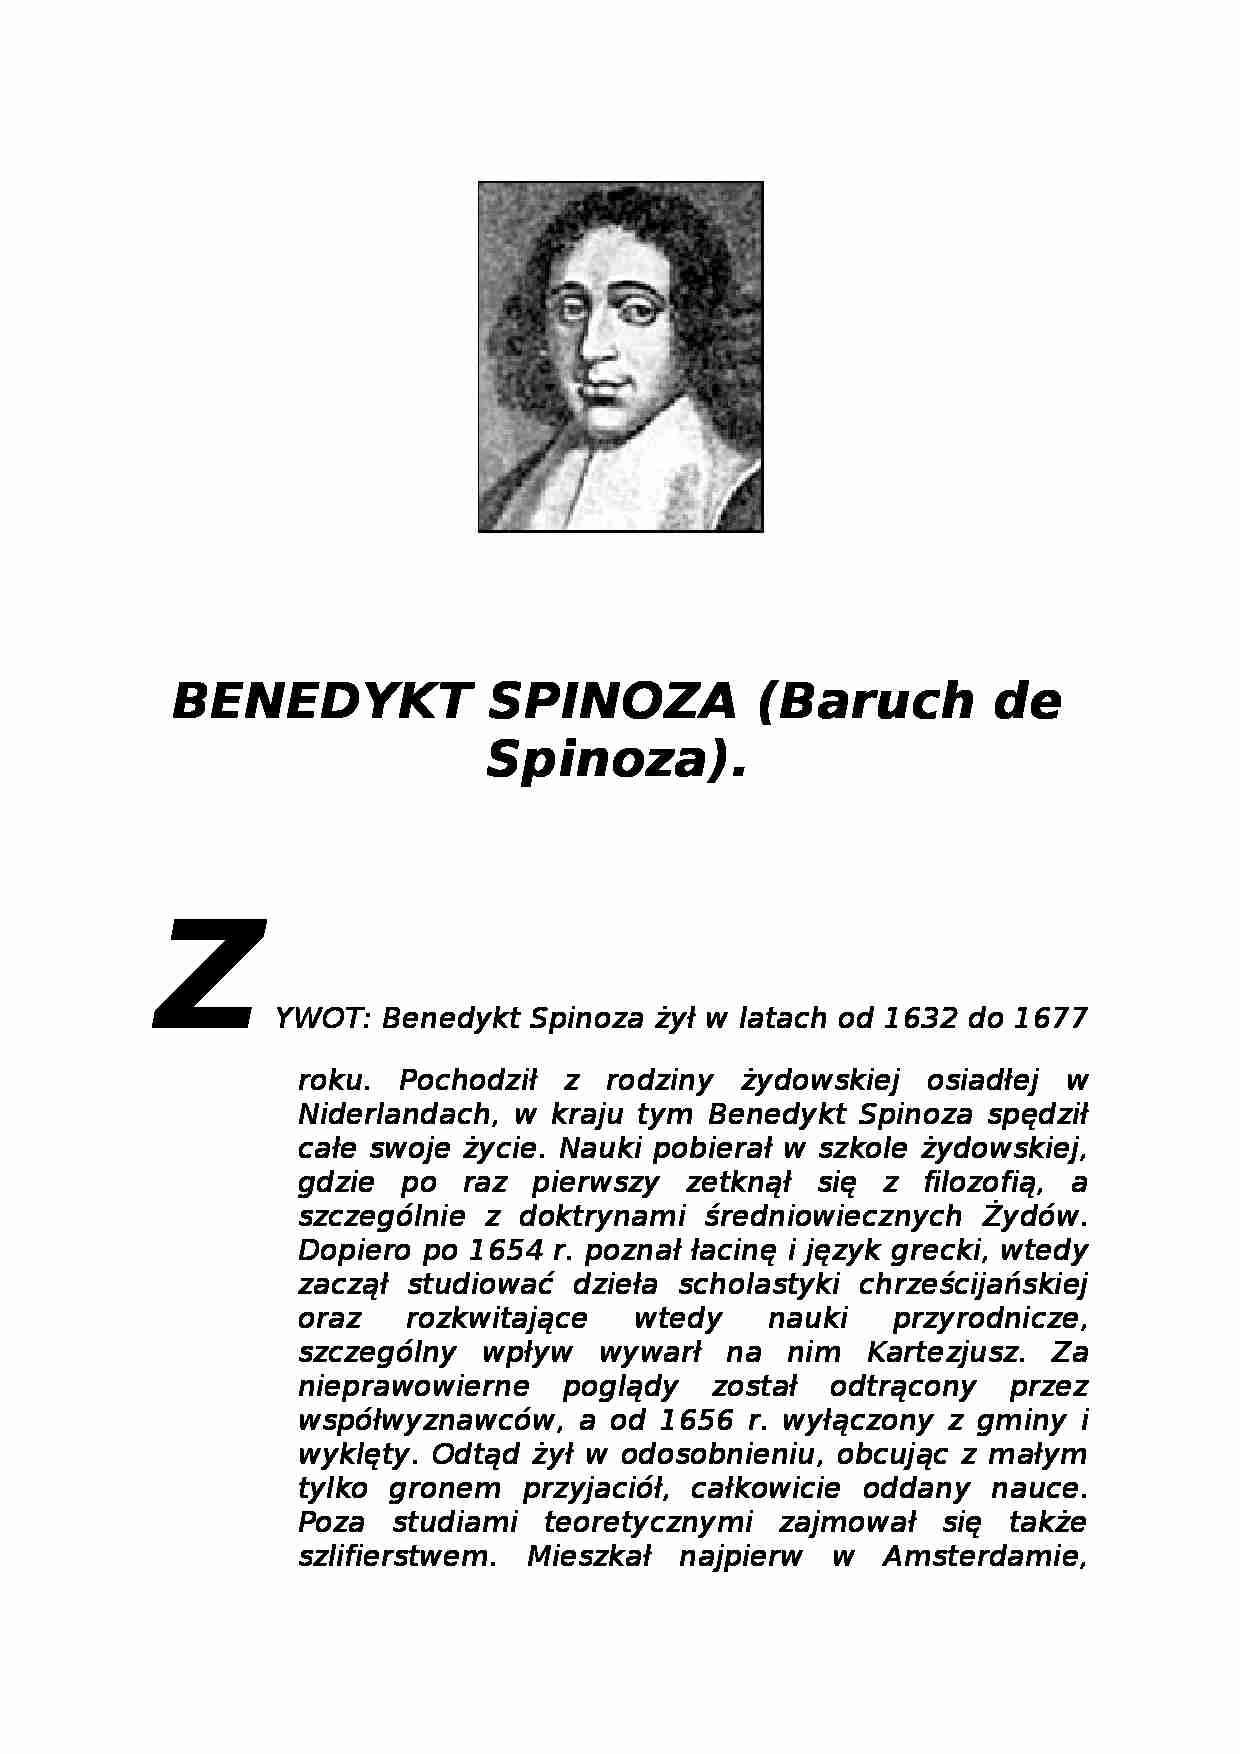 Biografia - Benedykt Spinoza - strona 1